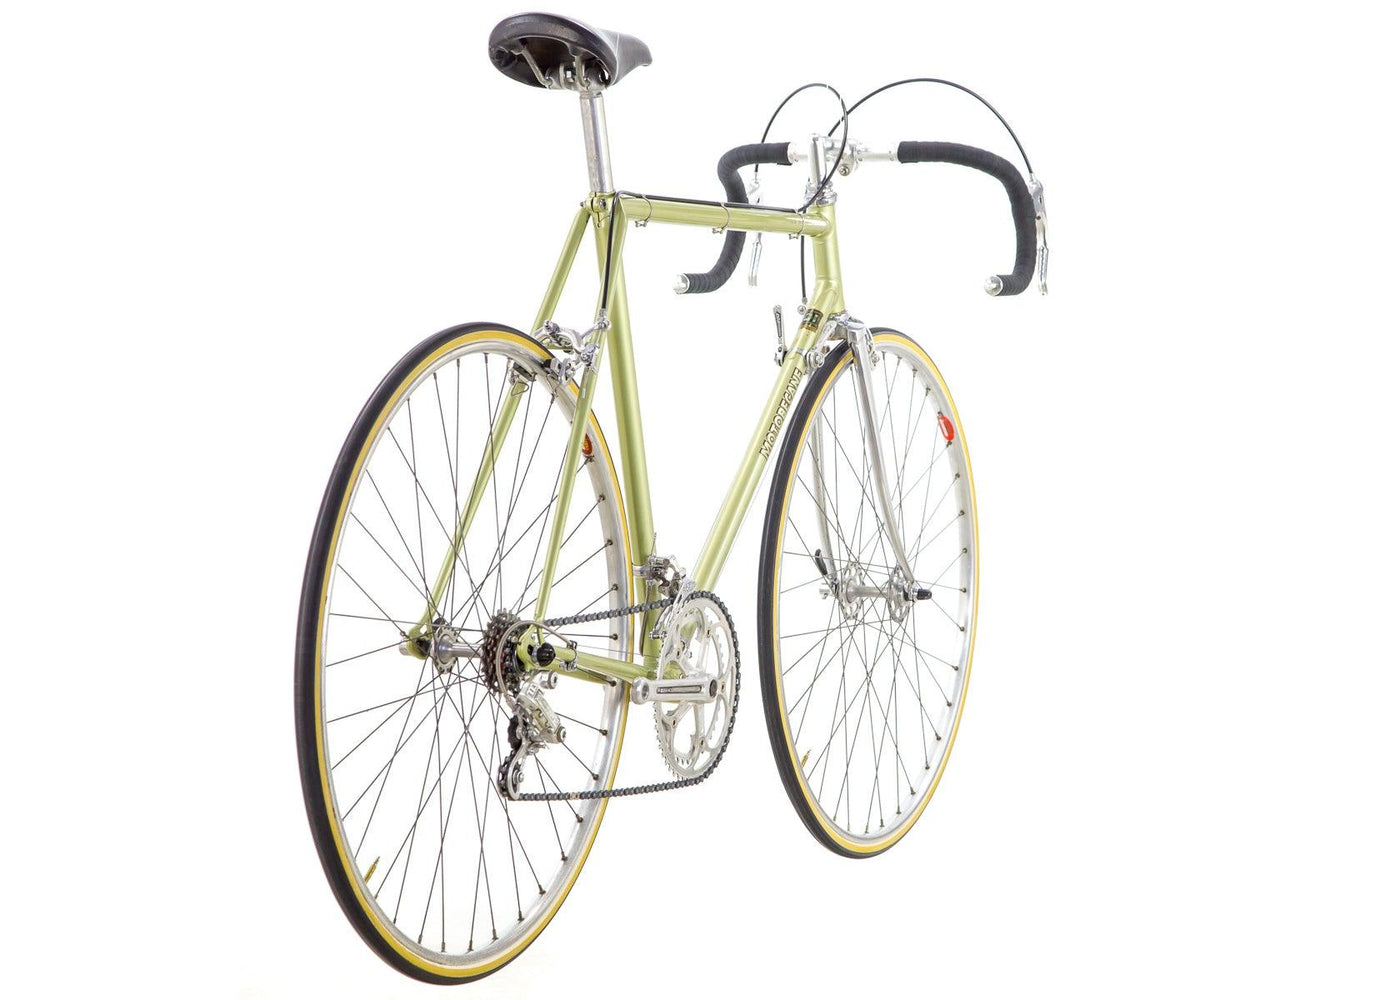 Motobecane C3 Classic Road Bicycle 1970s - Steel Vintage Bikes